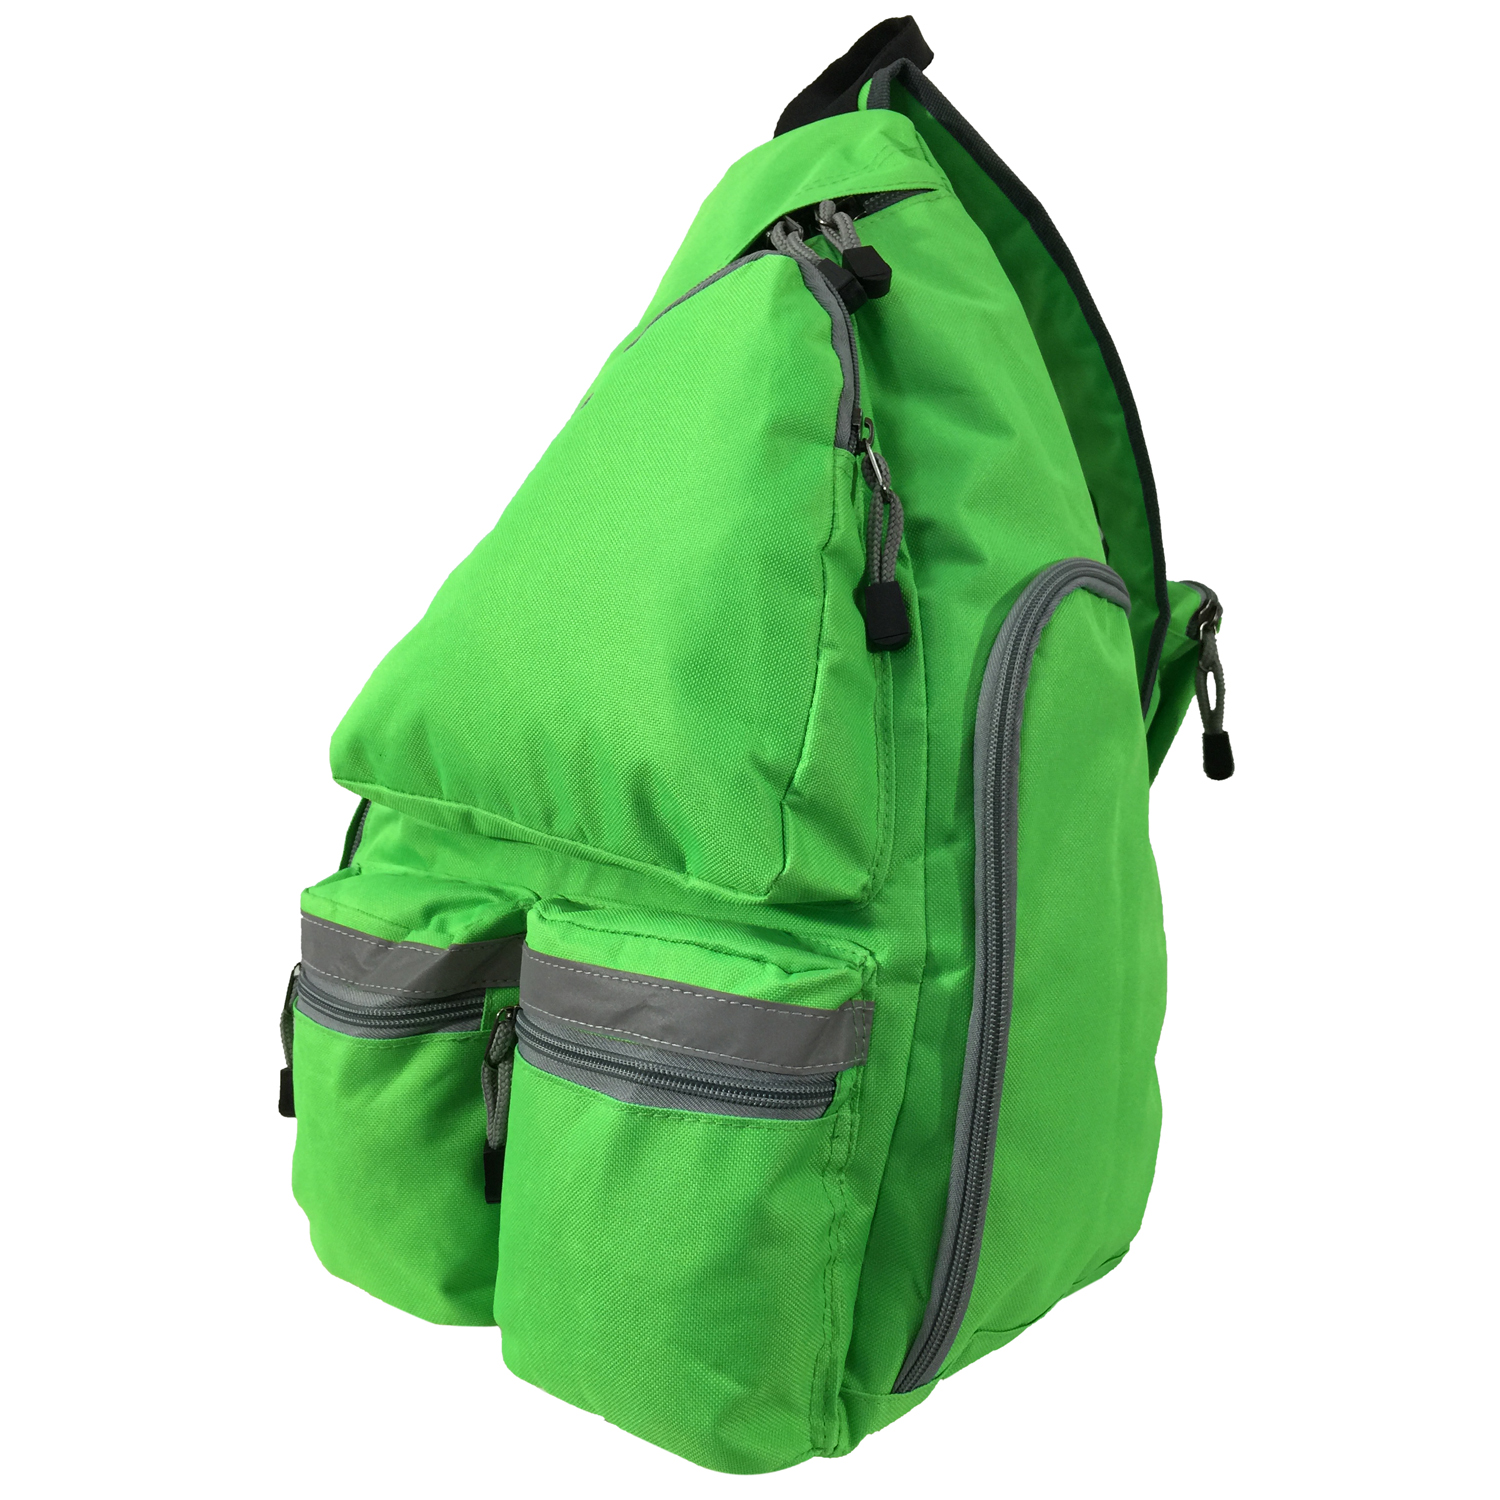 K-Cliffs Reflective Sling Backpack Bright Color Safety Cross Body Bag Student Daypack Bookbag Green - image 5 of 7